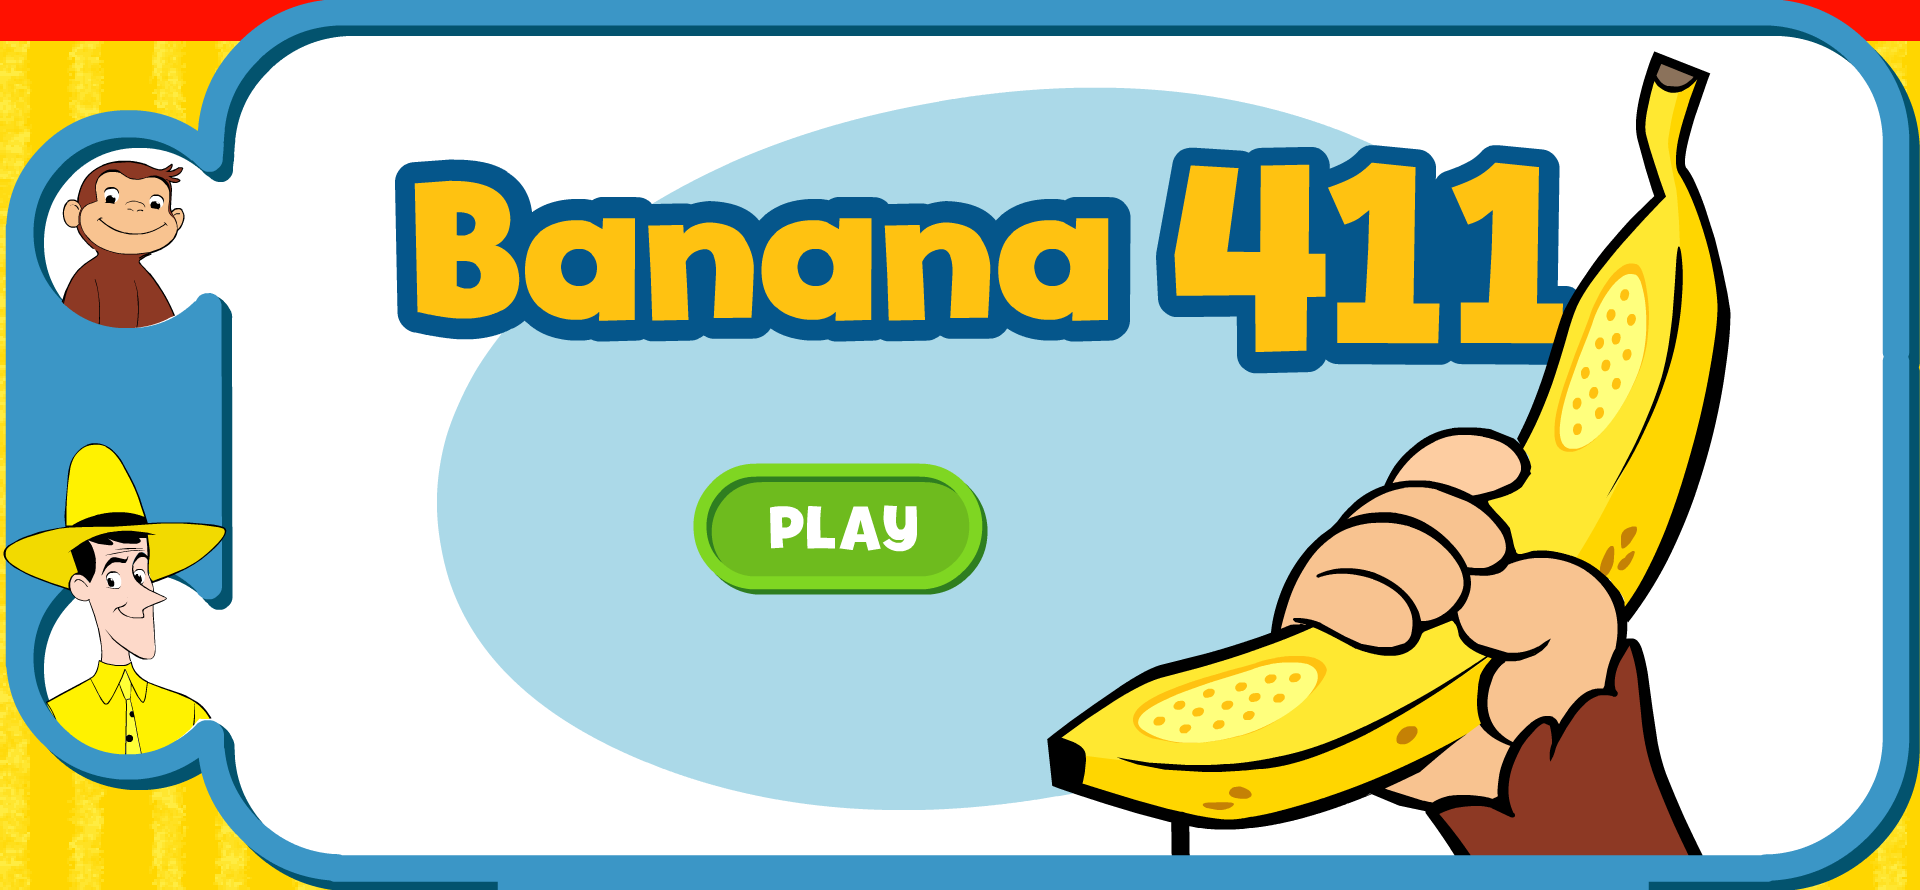 Curious george banana 411